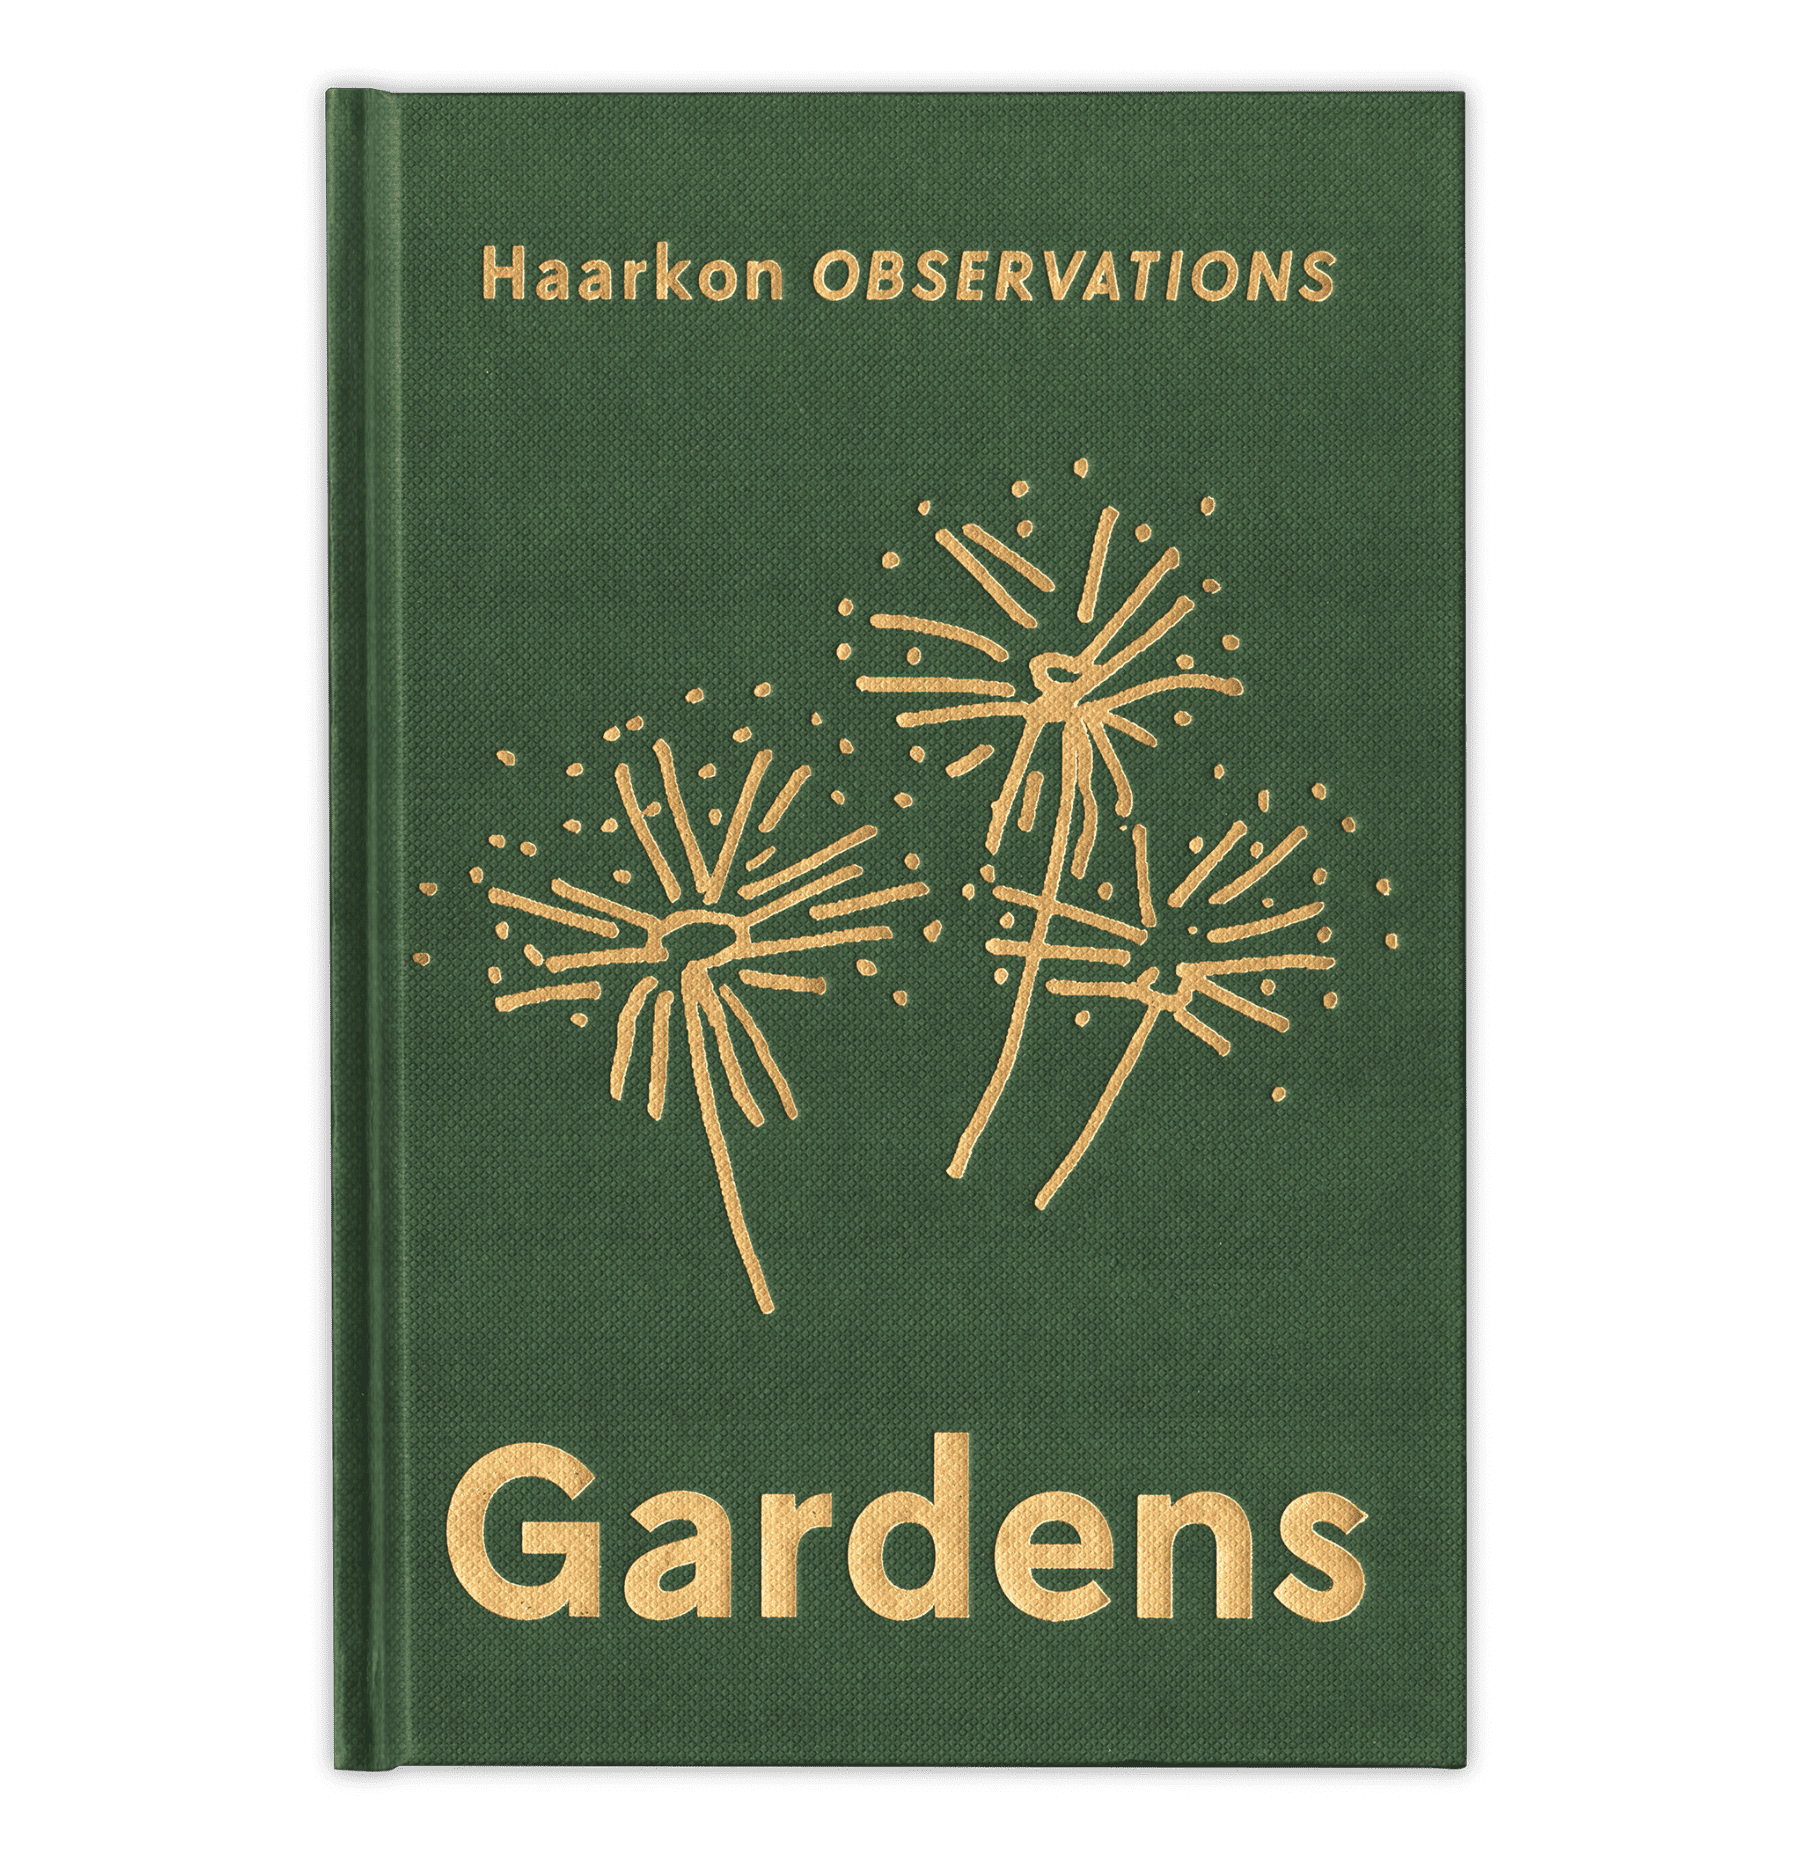 Haarkon Observations Gardens